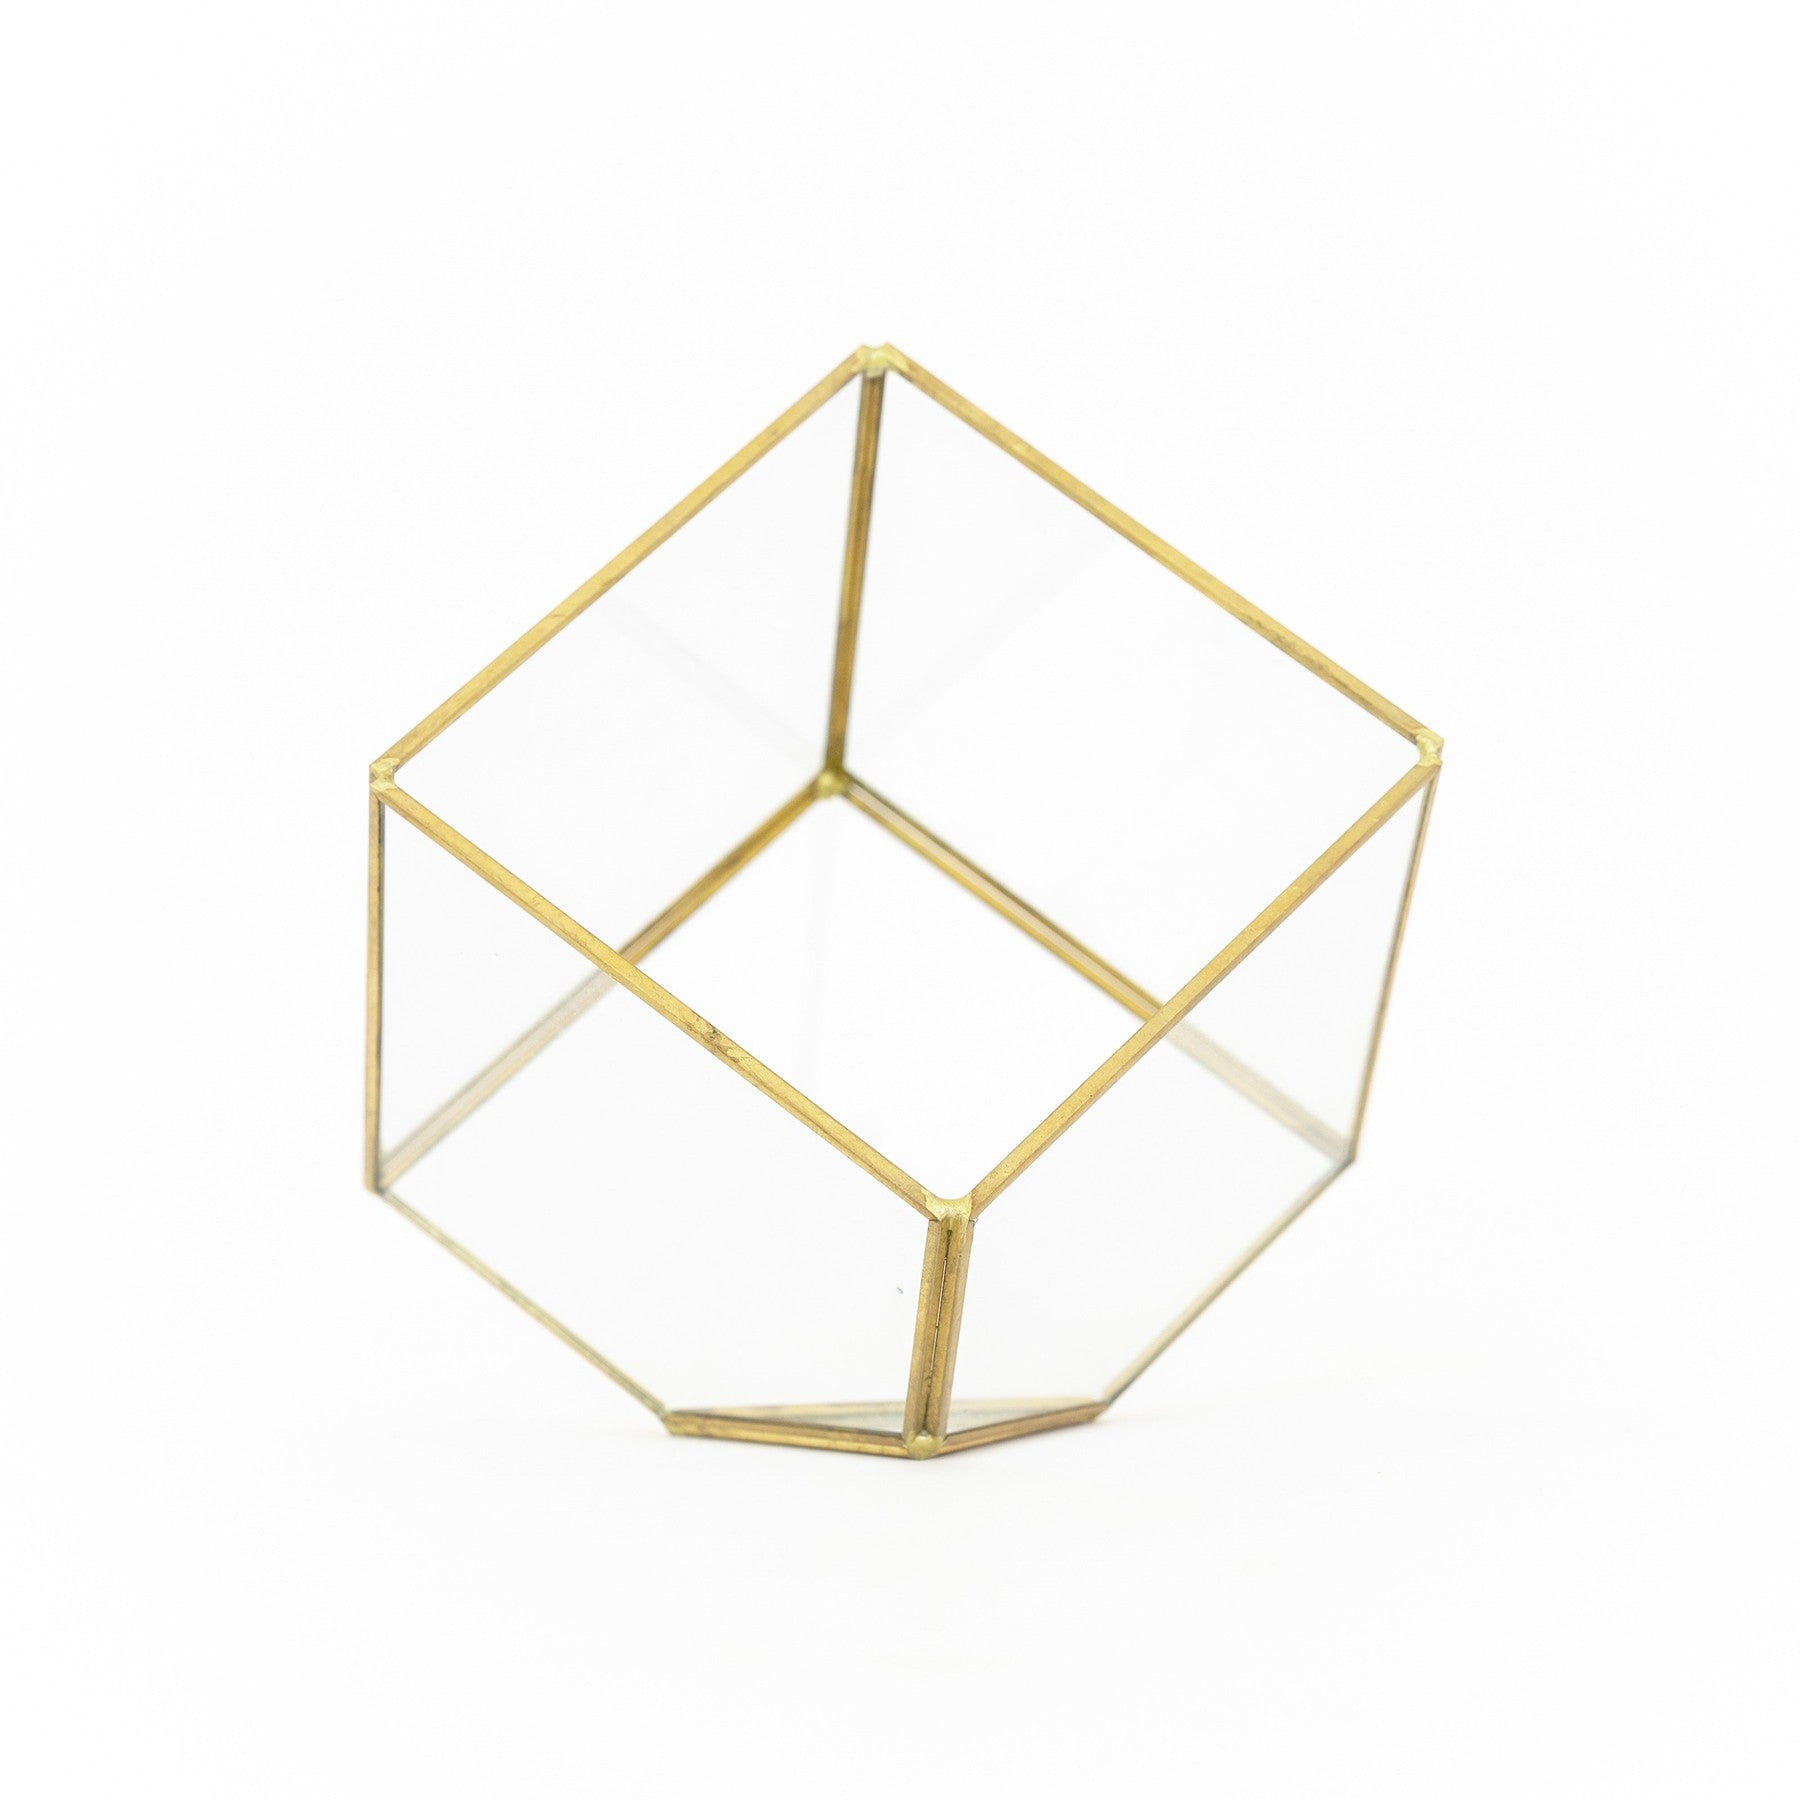 Heptahedron Geometric Glass Terrarium - Gold Metallic Finish - Trendy Holder For Tillandsia Air Plants-gift-The Succulent Source